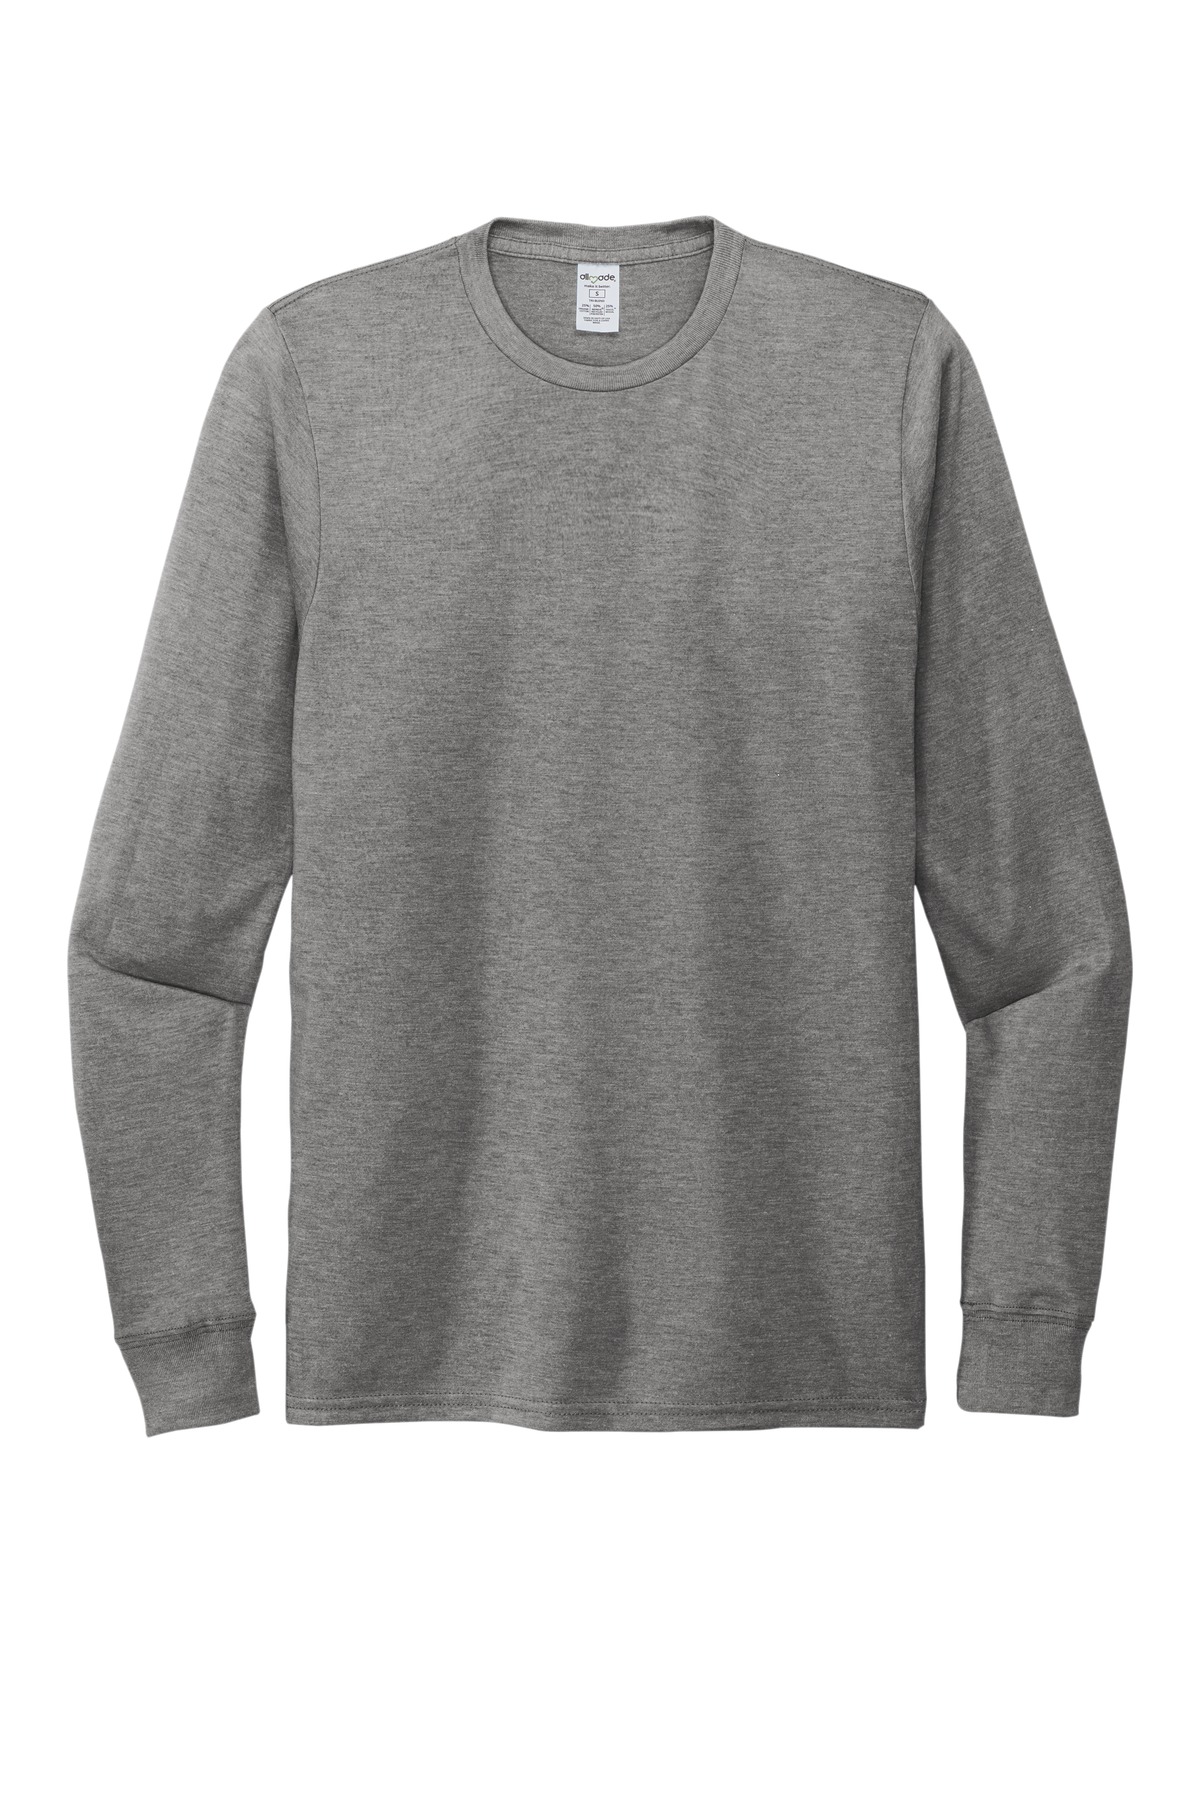 Allmade ® Unisex Tri-Blend Long Sleeve Tee AL6004 - Custom Shirt Shop